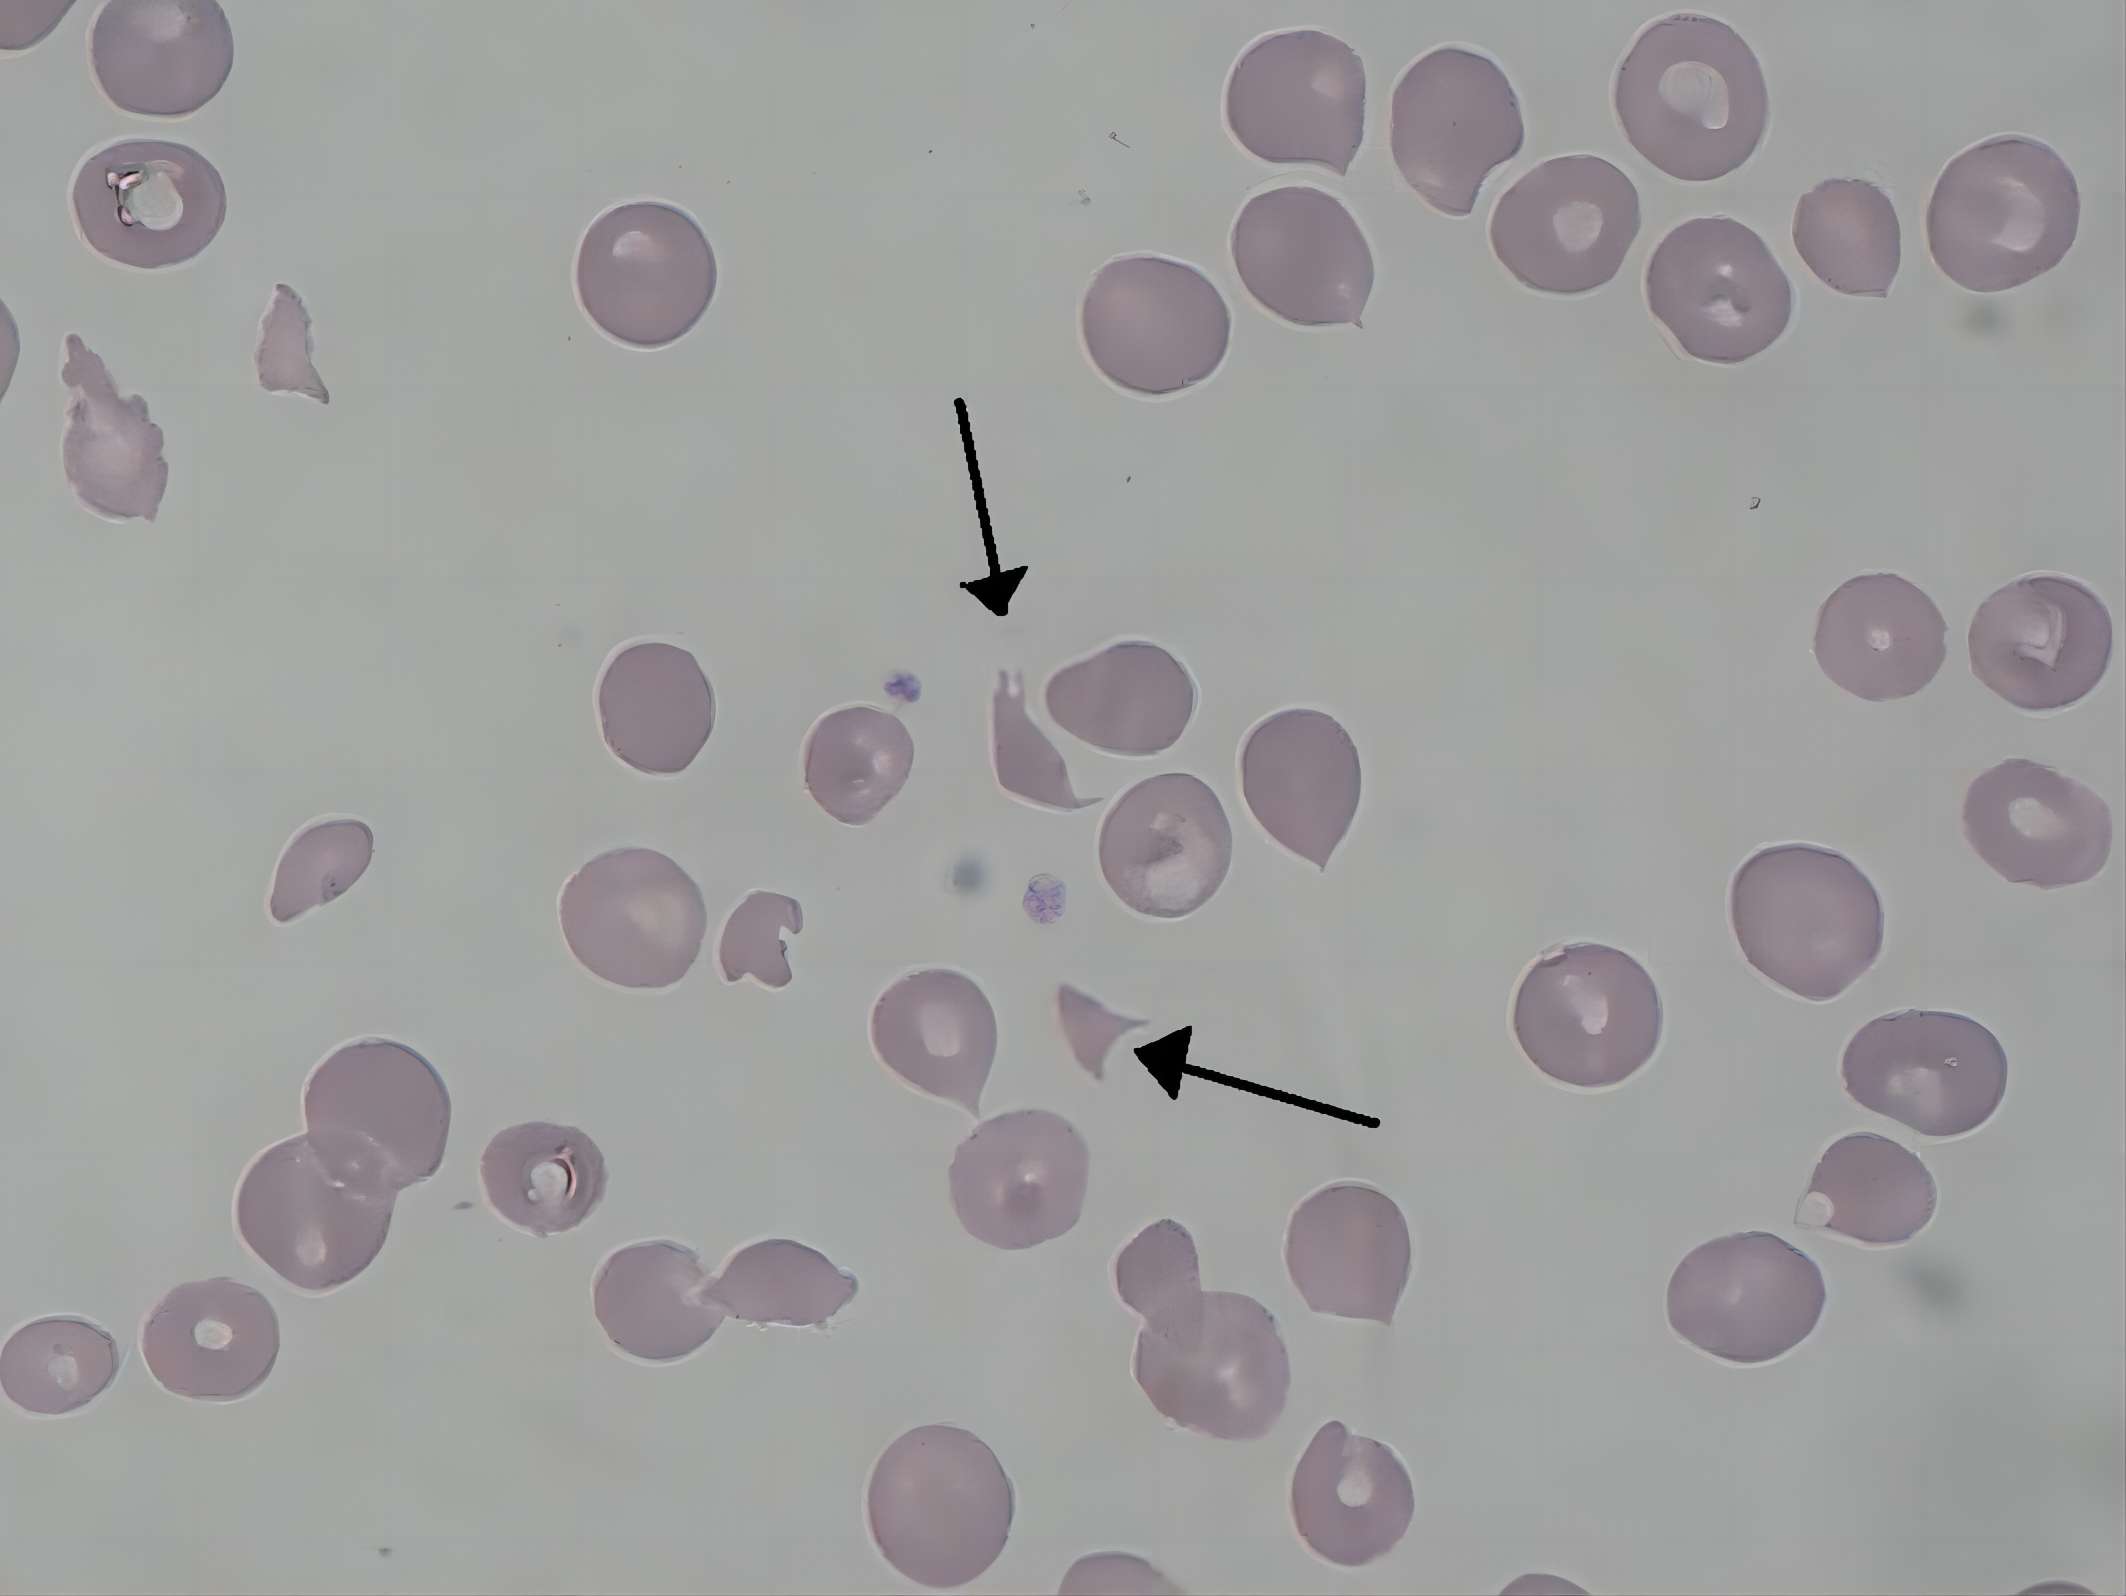 Fig. 1 Schizocytes in hemolytic-uremic syndrome. （By Paulo Henrique Orlandi Mourao - Own work, https://commons.wikimedia.org/wiki/File:Schizocyte_smear_2009-12-22.JPG)